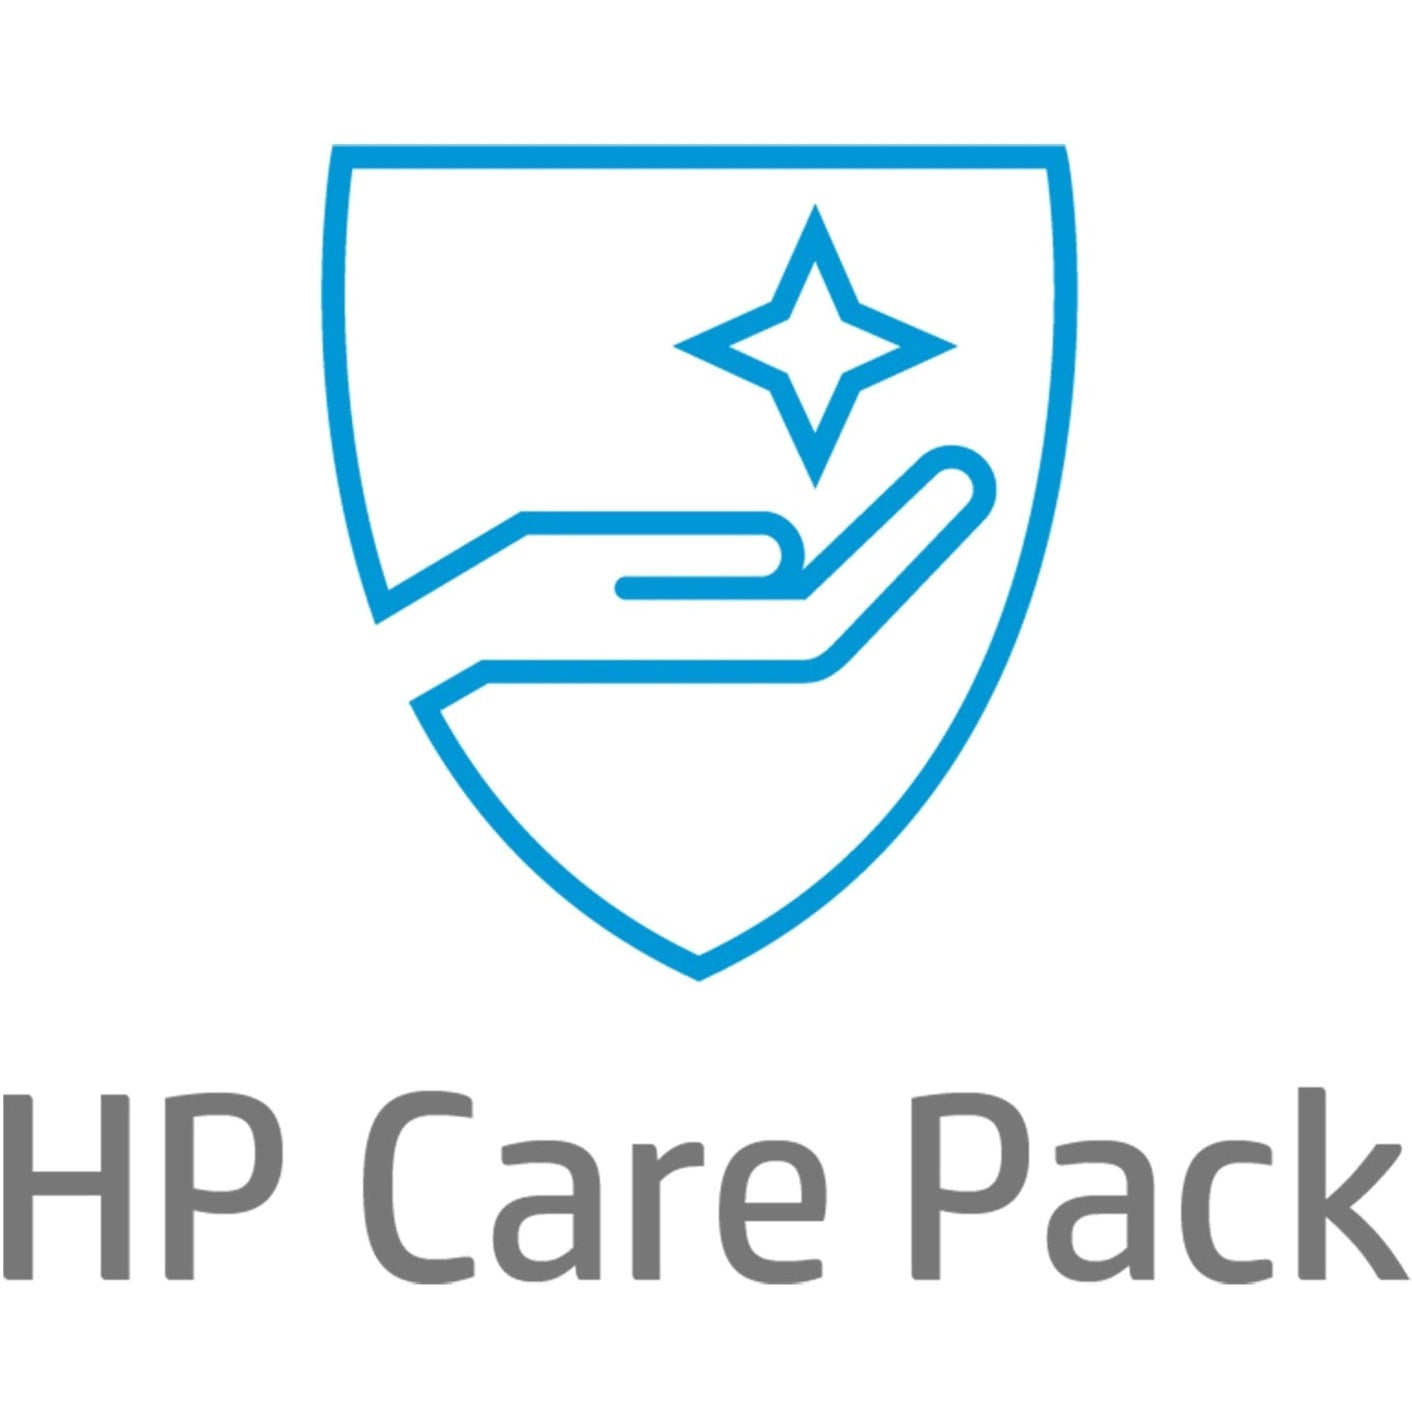 HP Care Pack - Service - Installation - Labor - Physical (U9JT1E)